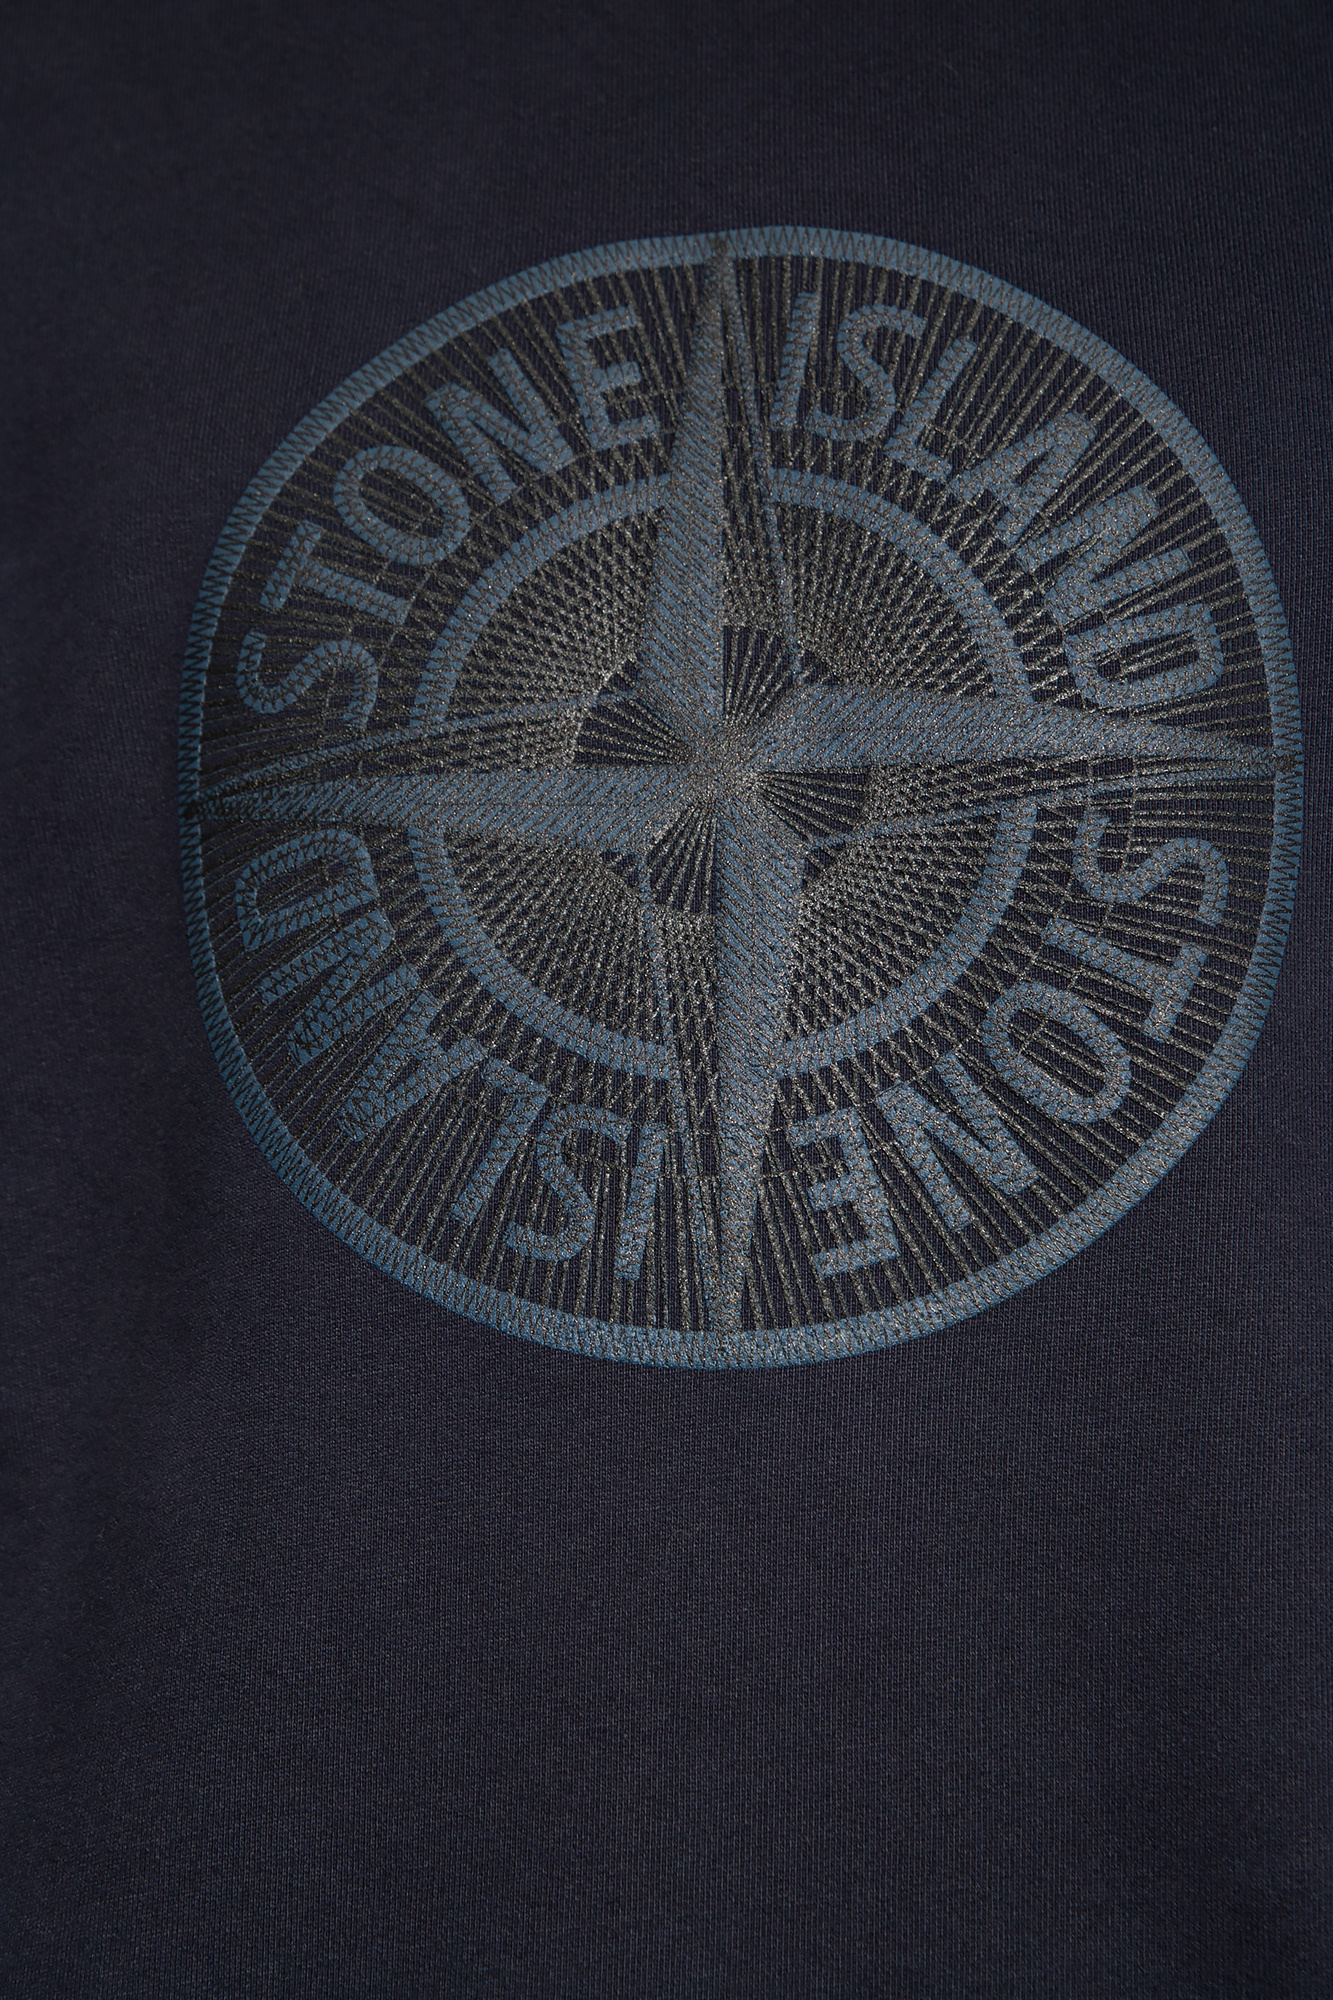 Stone Island Sweatshirt with logo, Men's Clothing